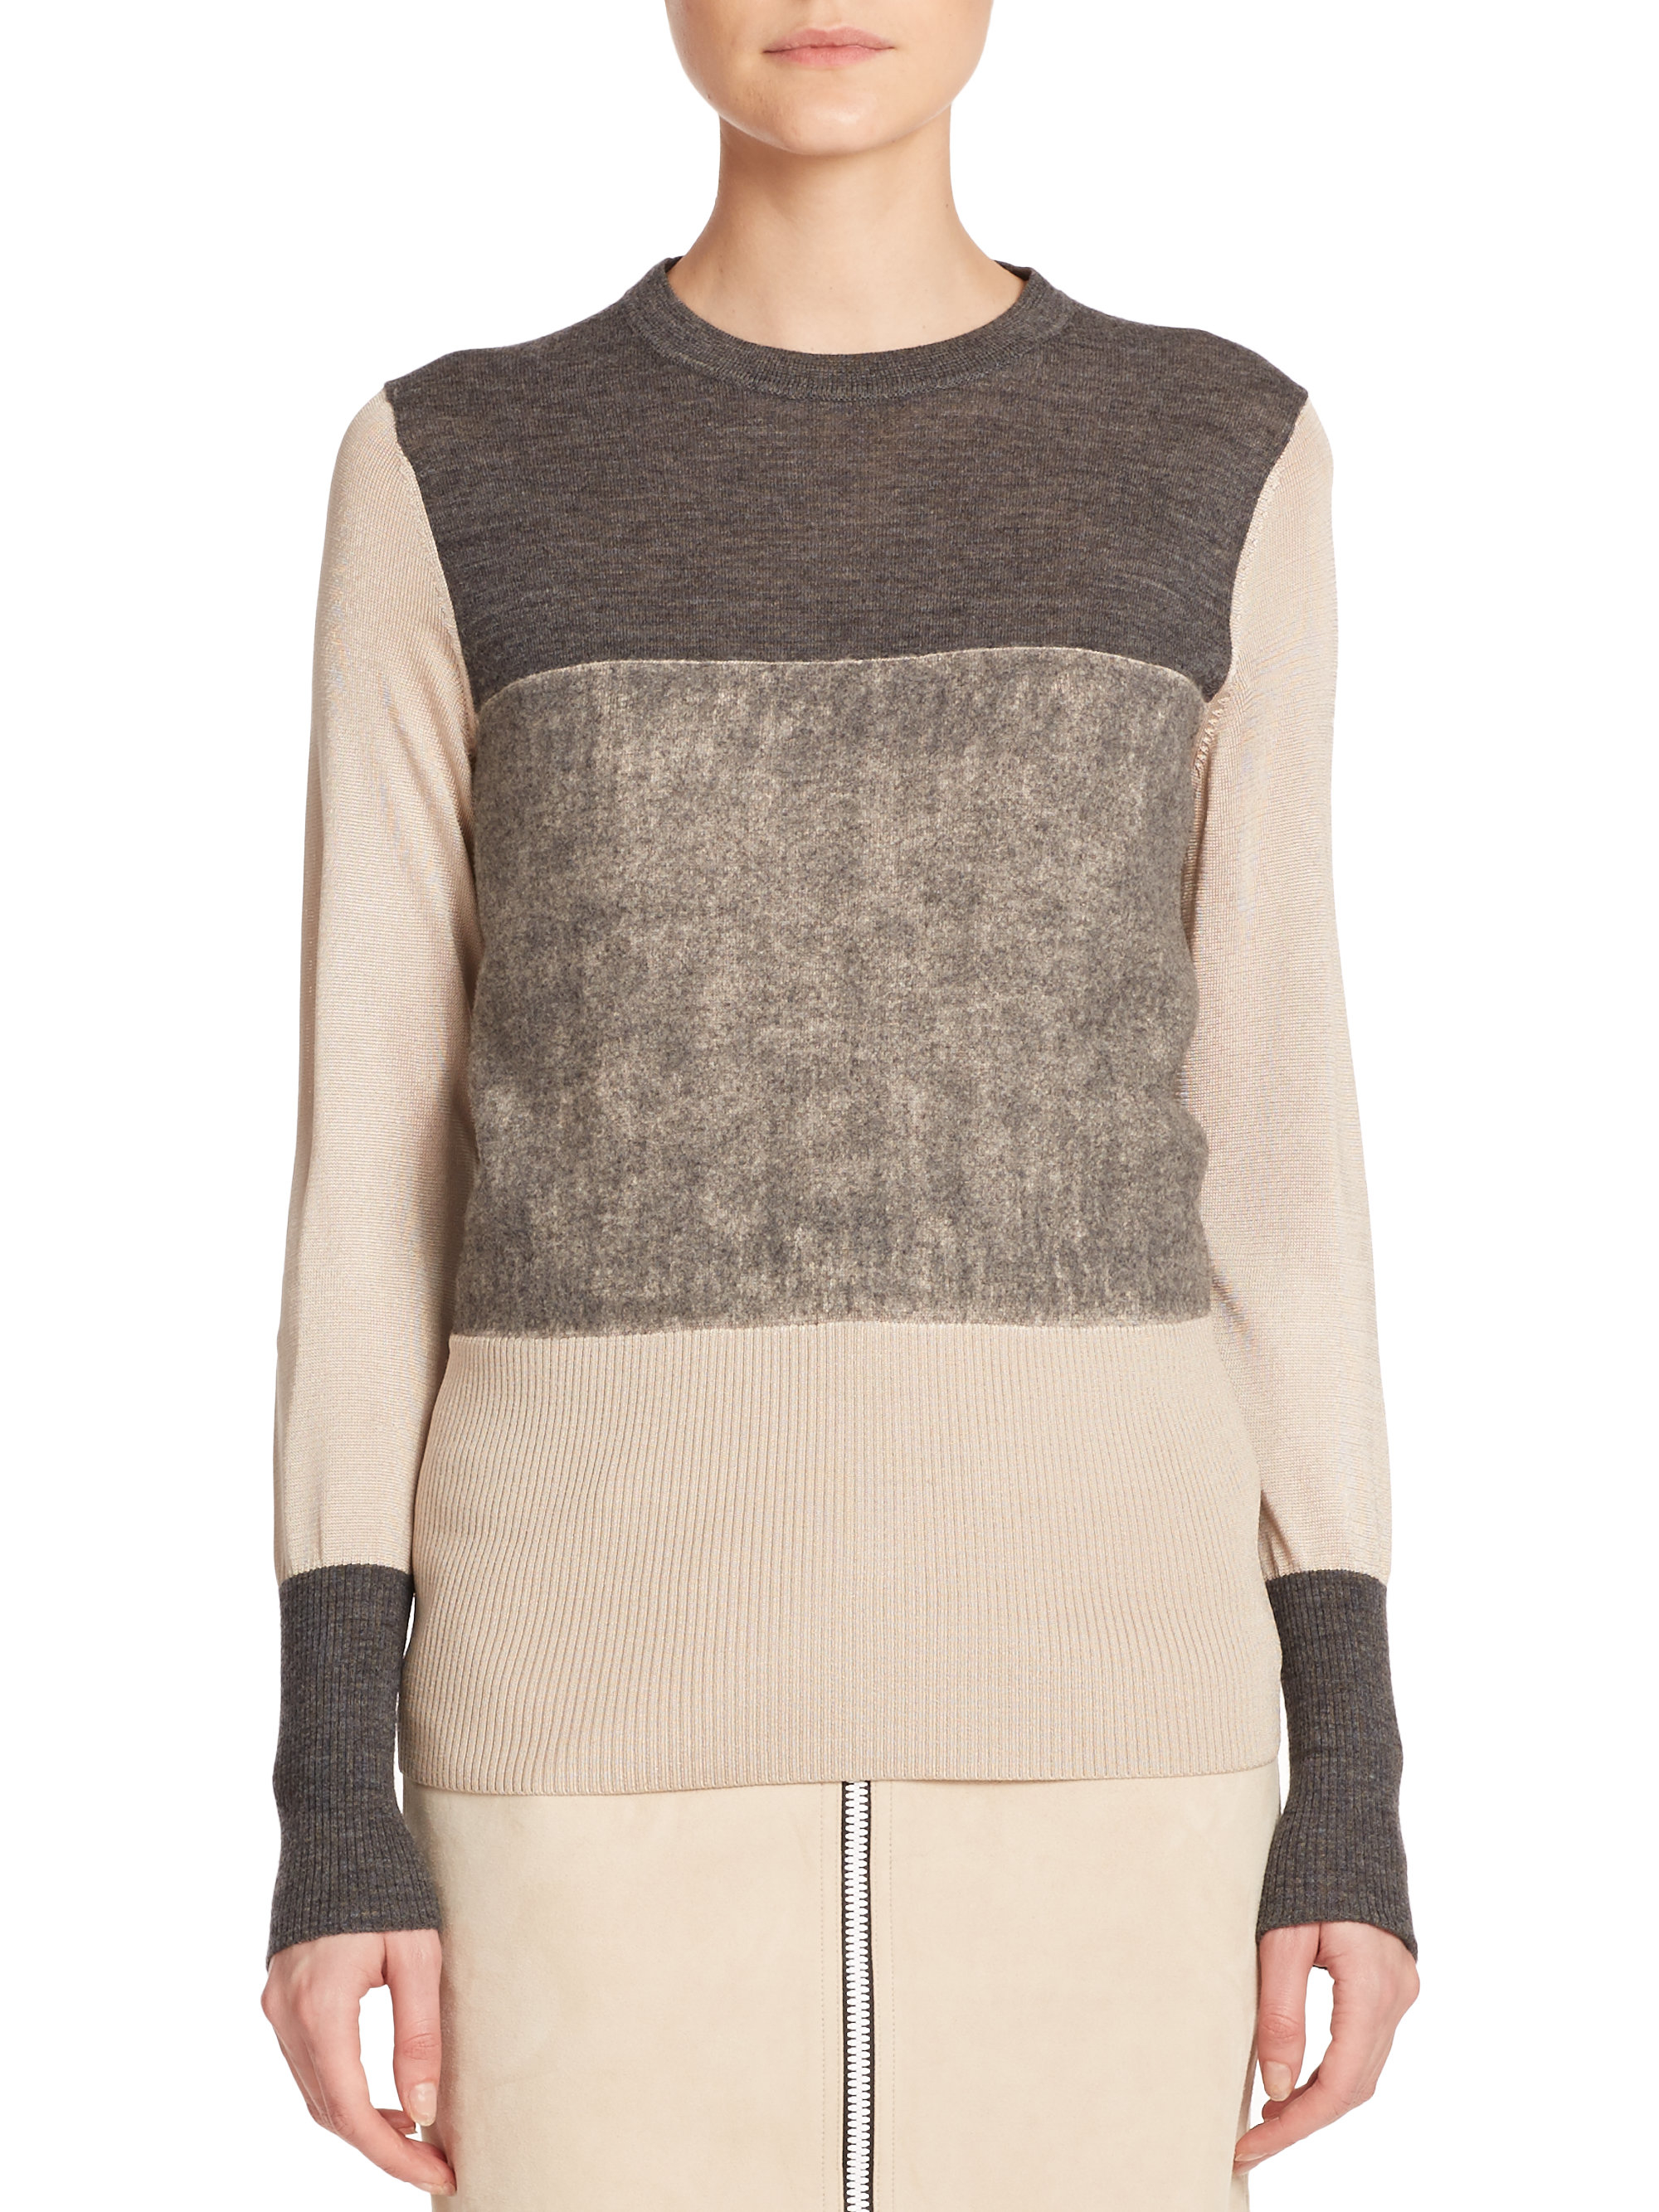 Lyst - Rag & Bone Marissa Textured Colorblock Sweater in Gray